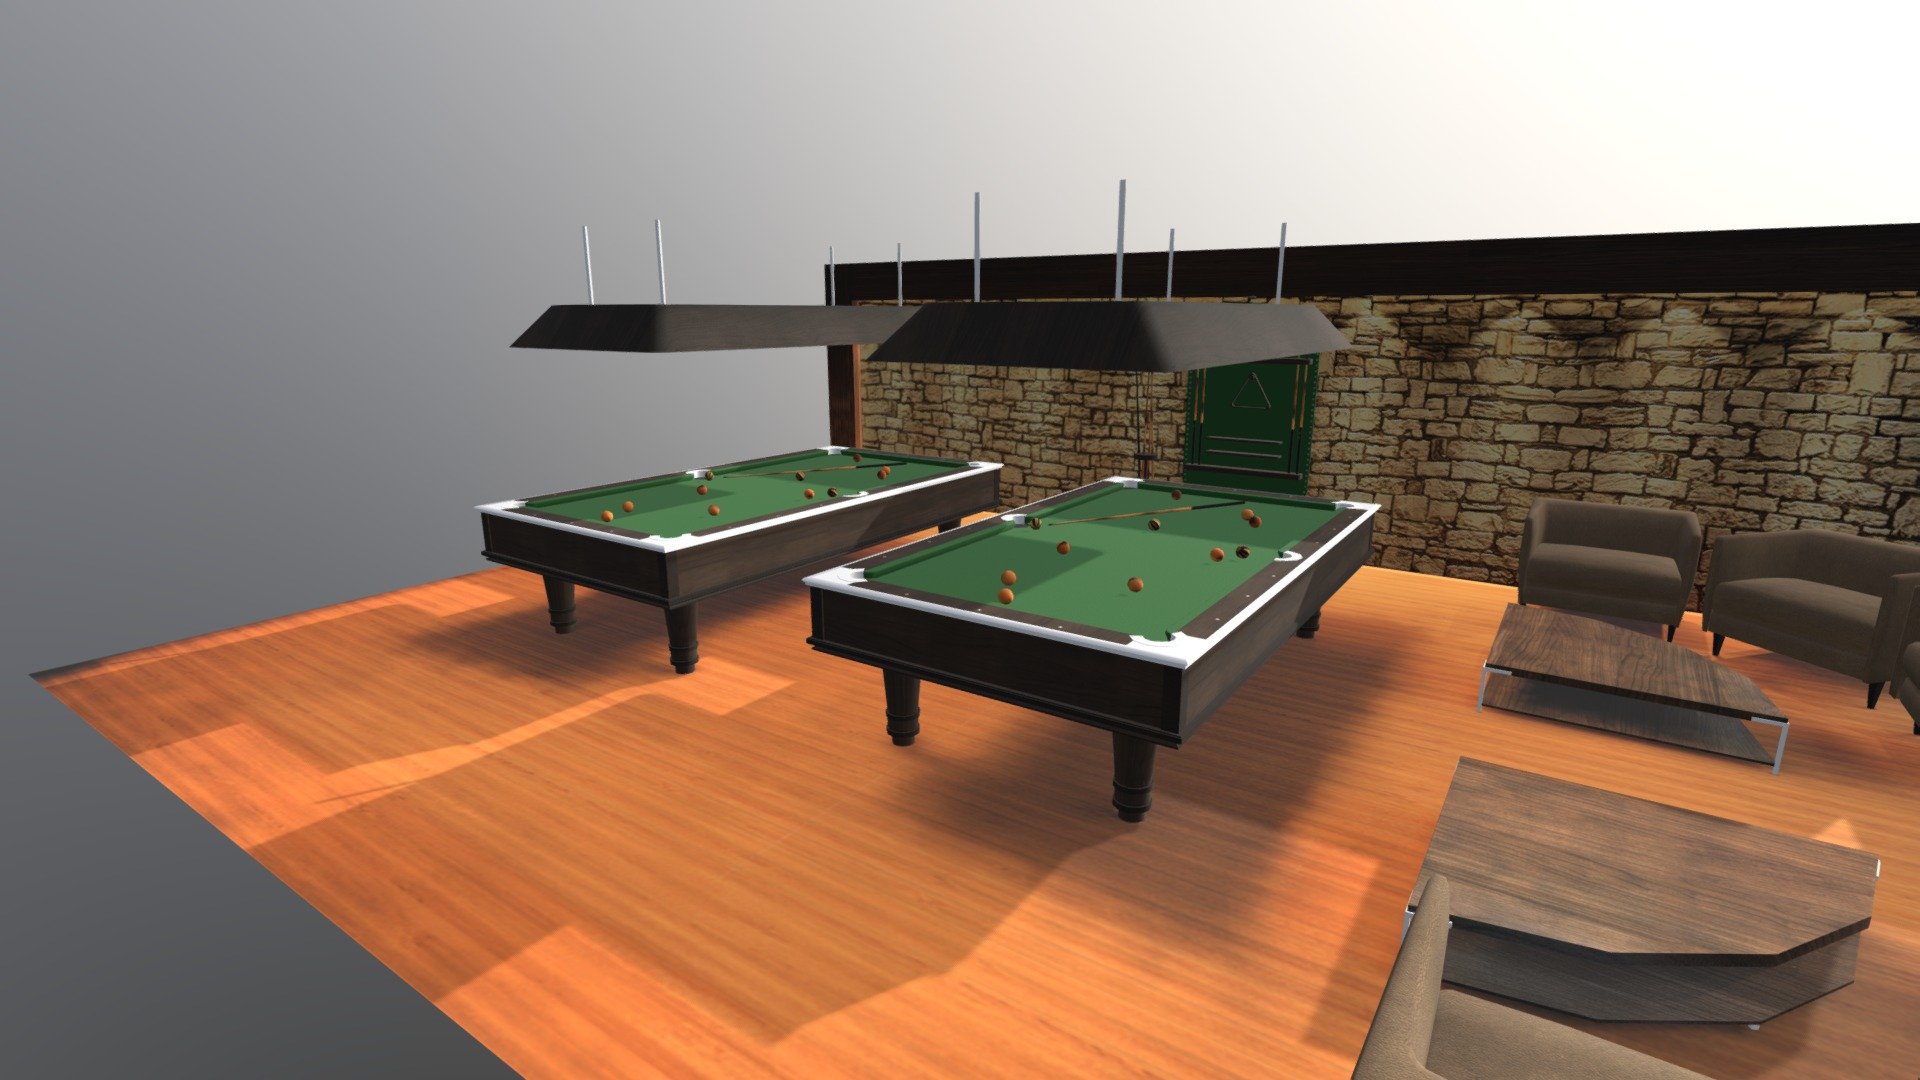 Billiards Room - 3D model by MehtabAhmed 3d model